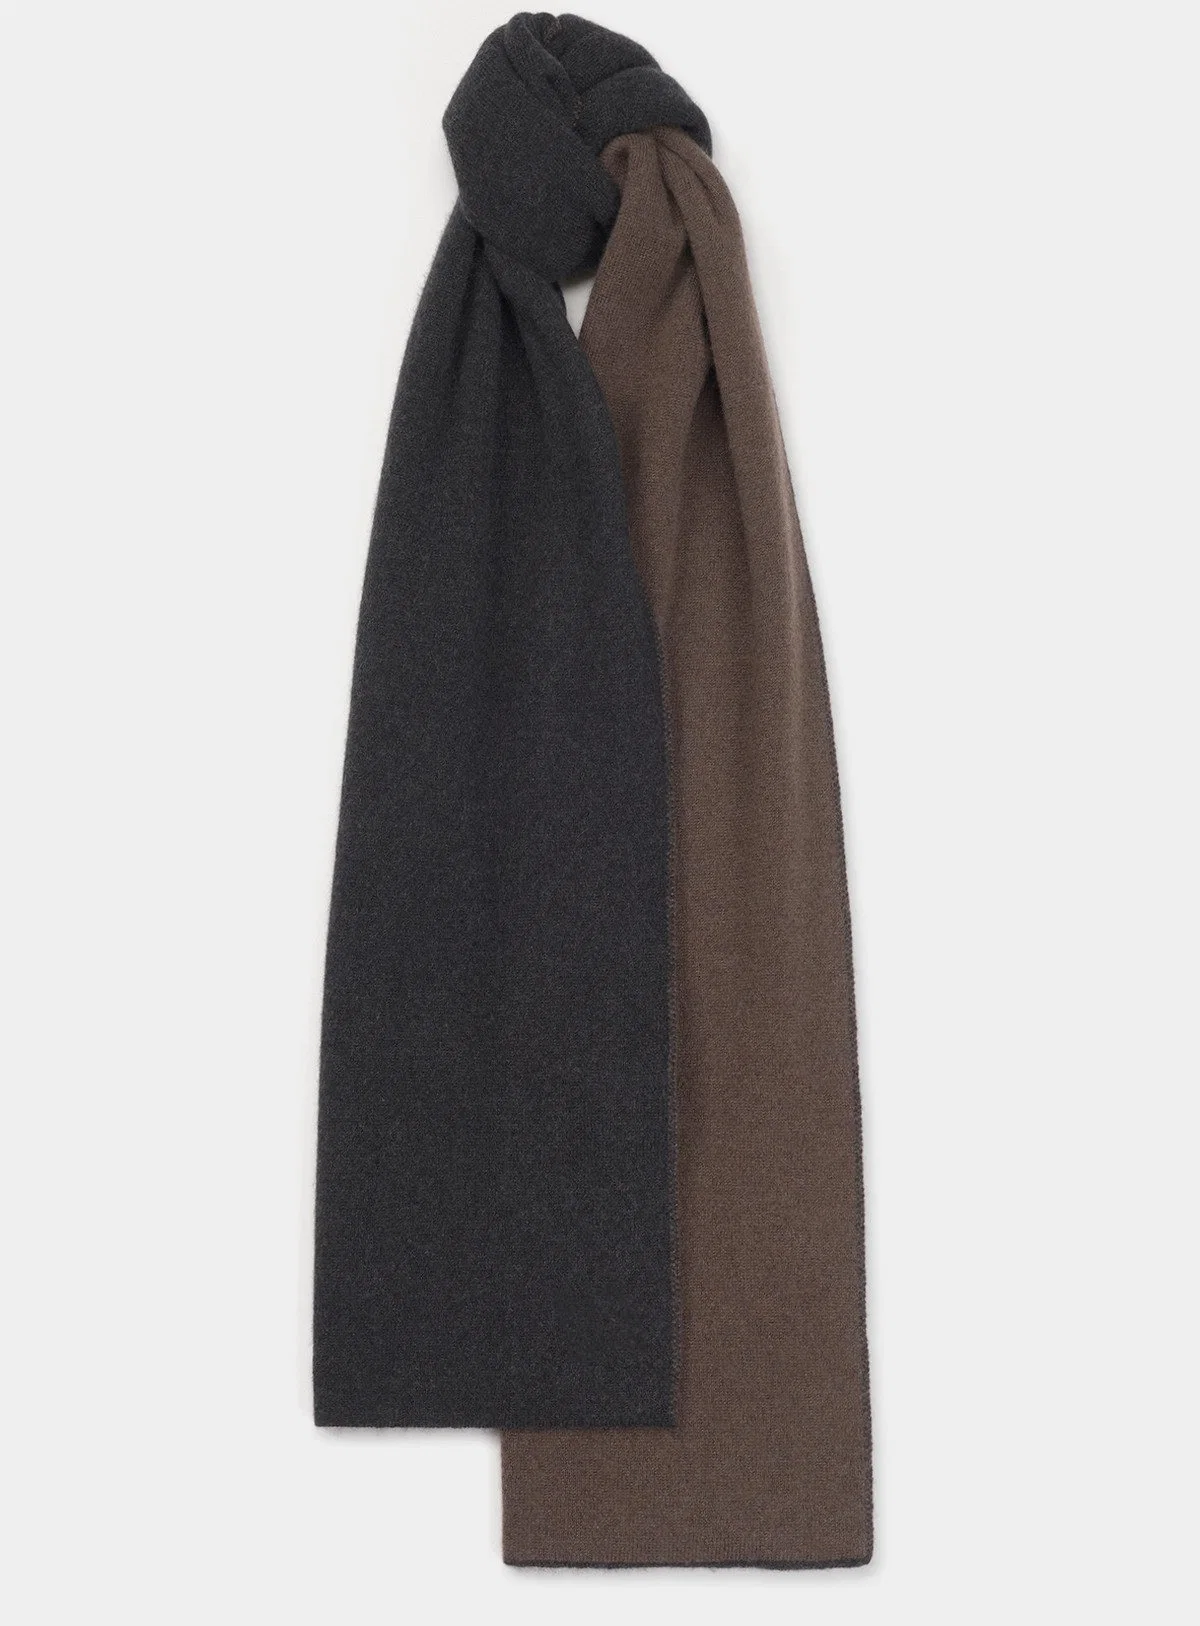 100% Kaschmir Strickmode Mode Zweifarbige Bekleidung Accessoires Schalldämpfer Winter Schal